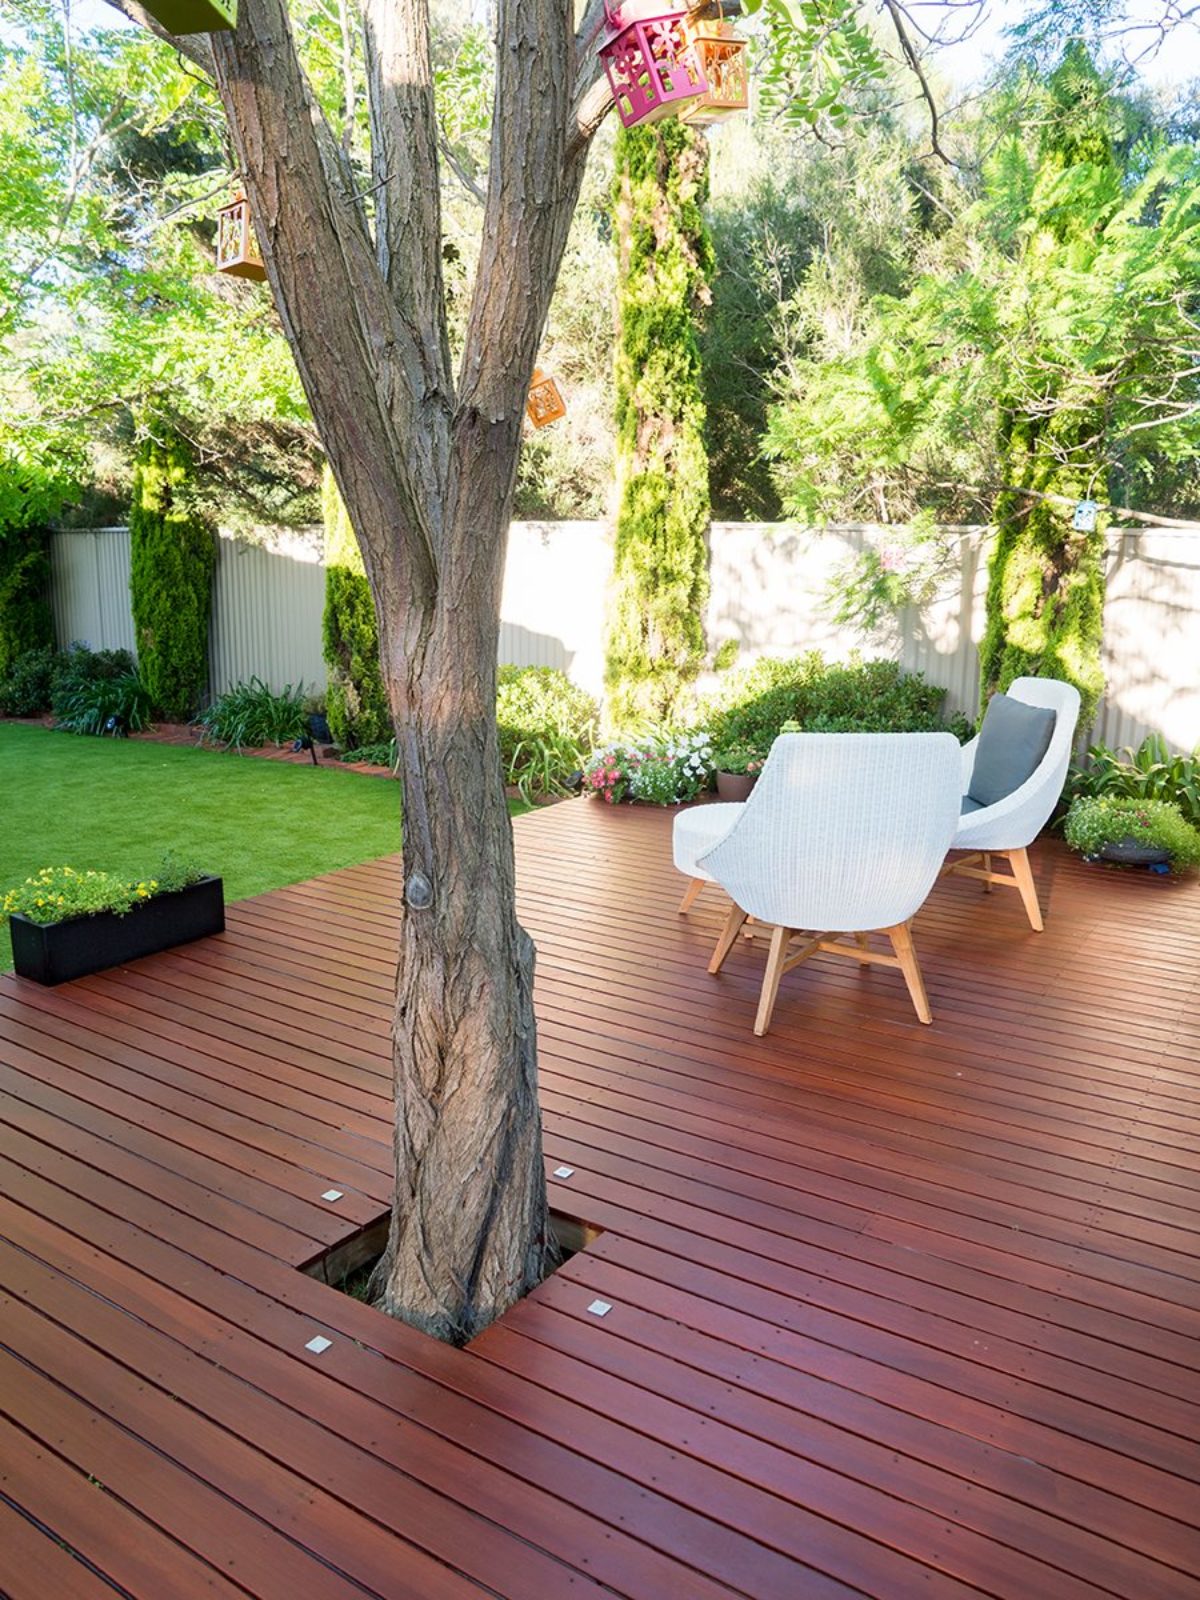 6 Awesome Diy Backyard Design Ideas For Spring